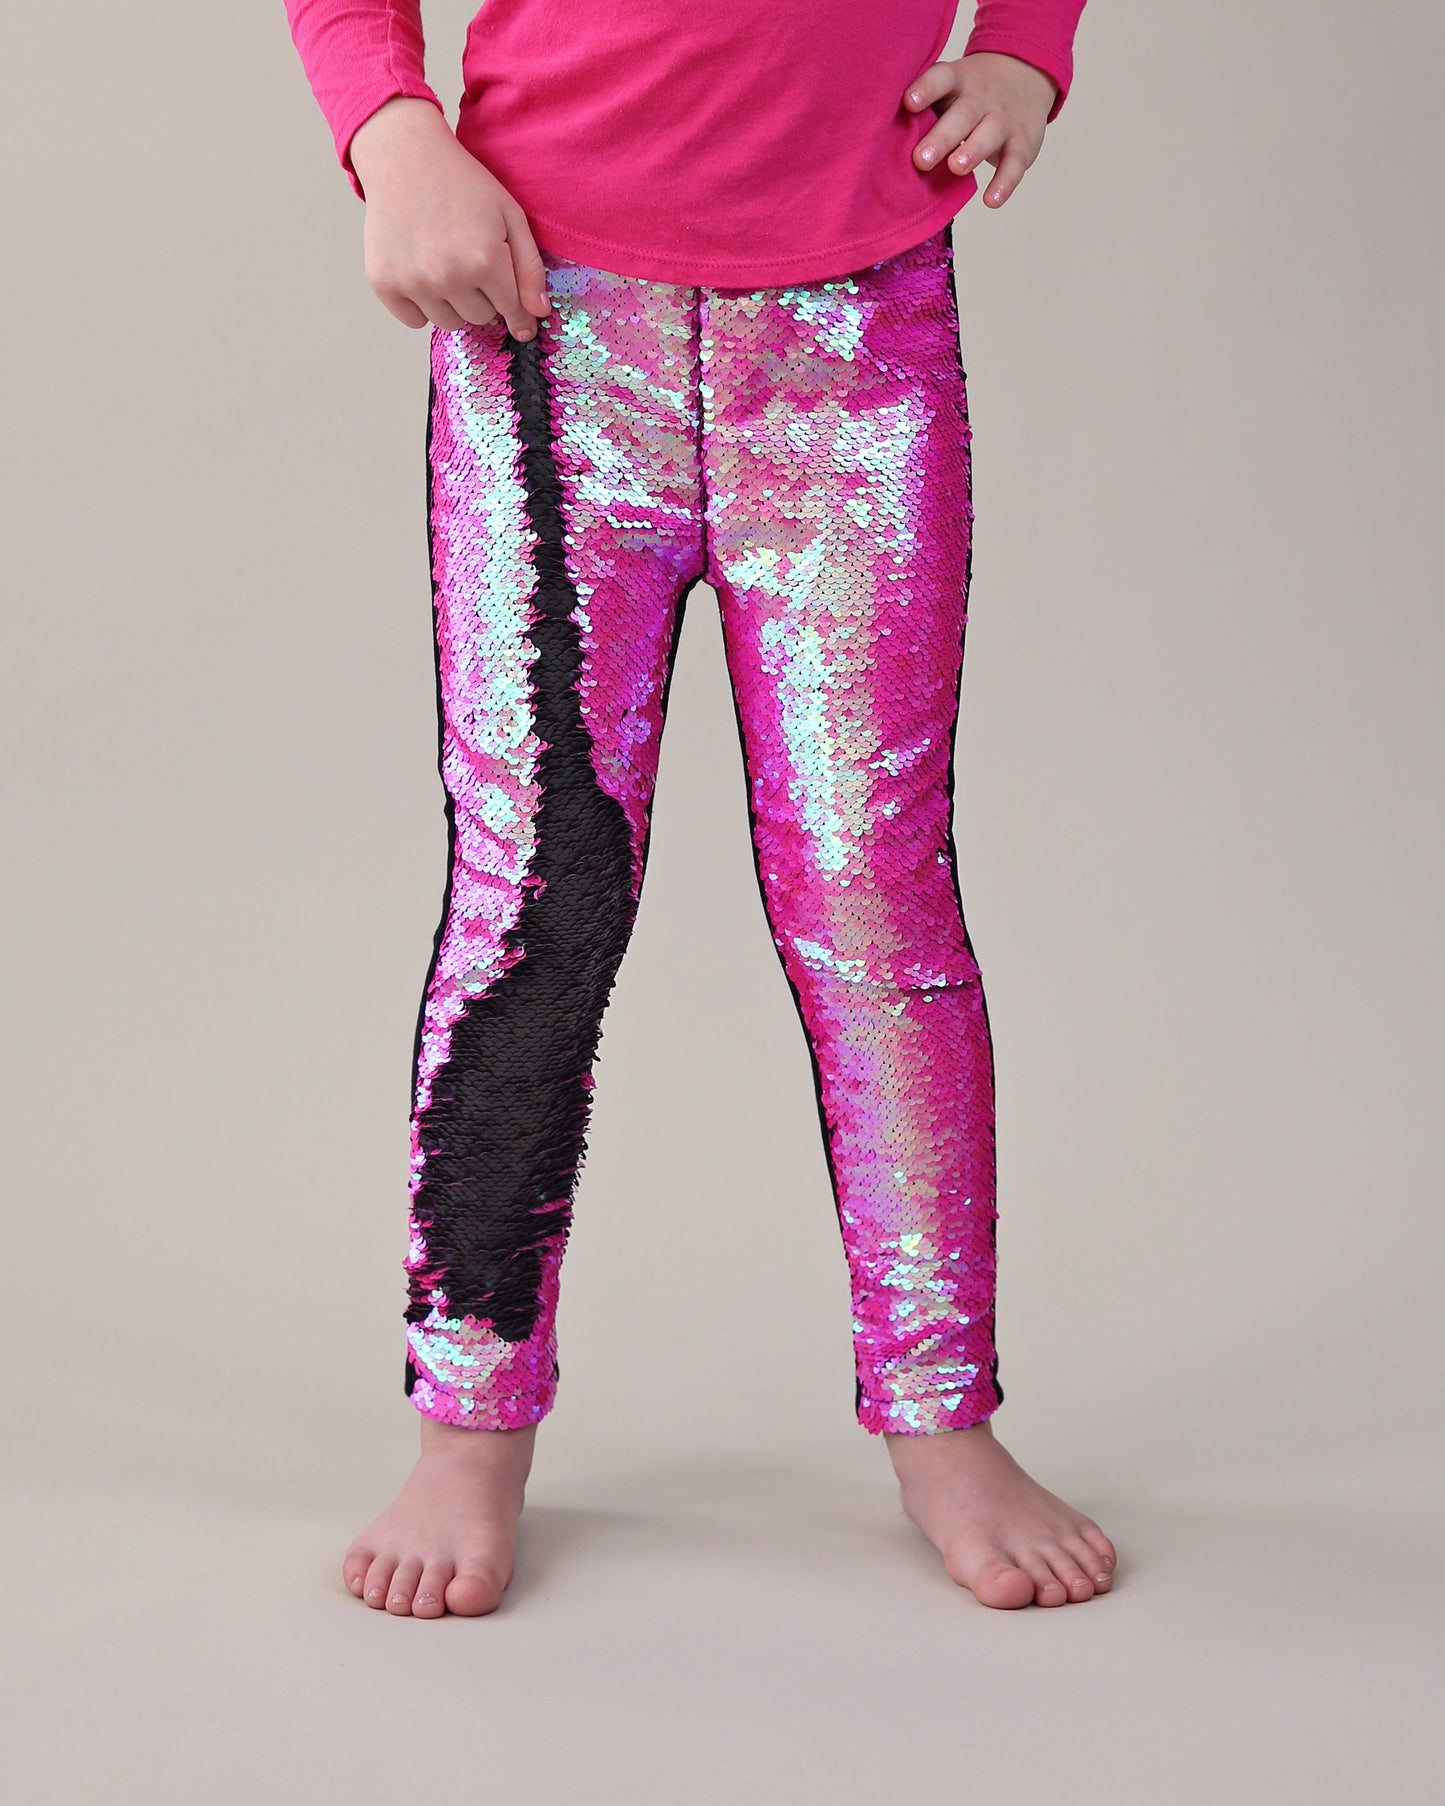 Flip Sequin Leggings in Pink and Black